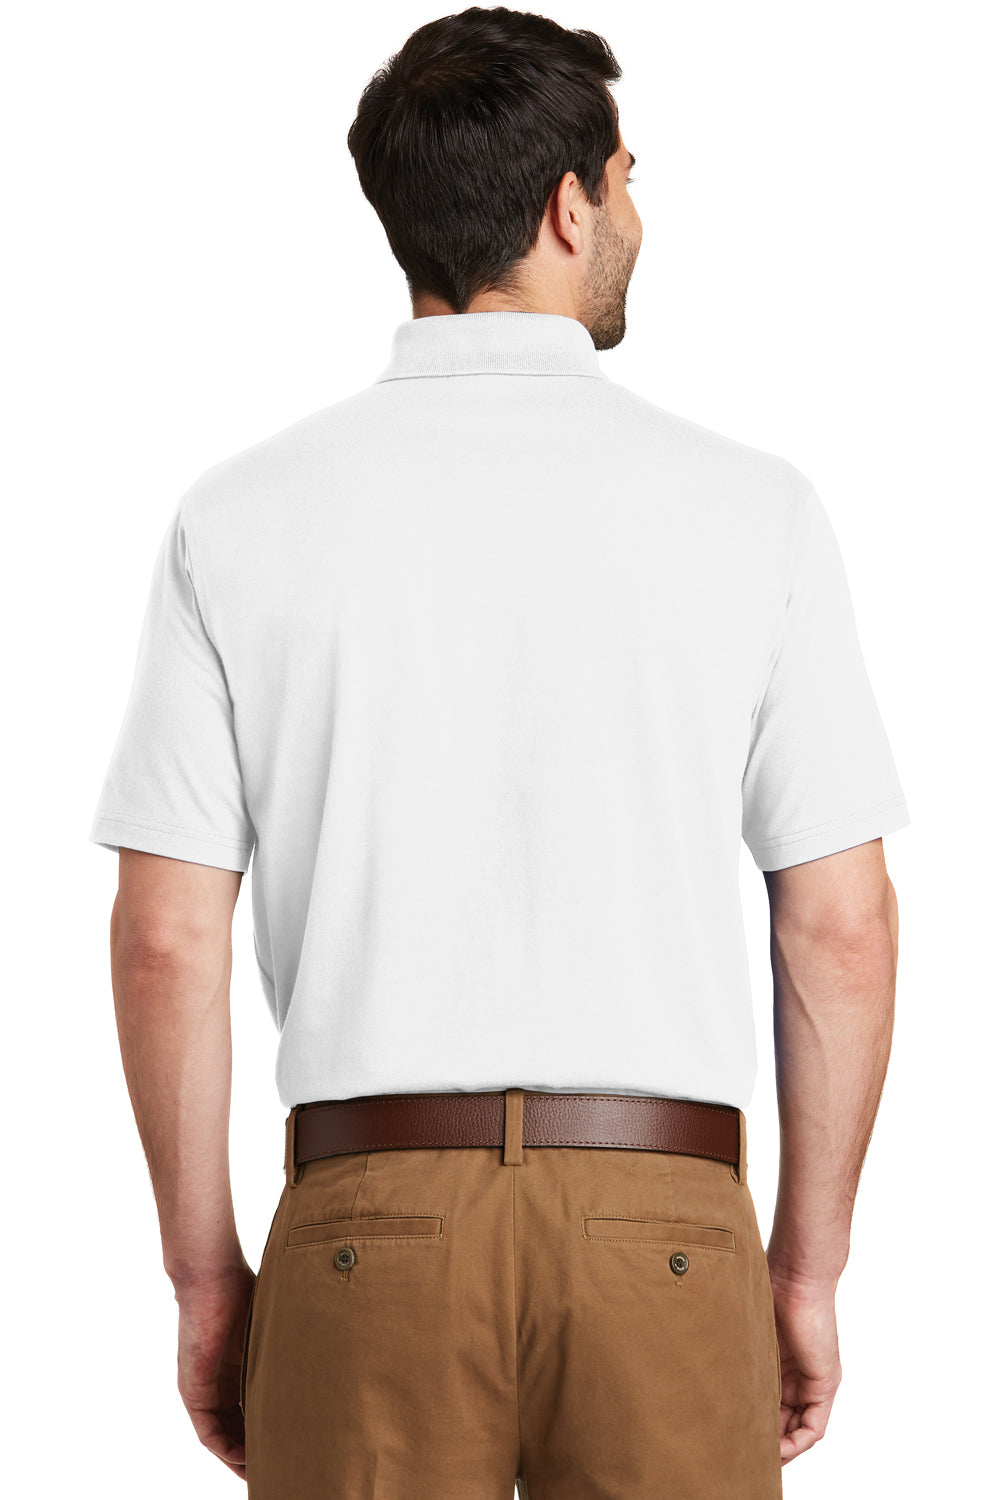 Port Authority K164 Mens SuperPro Moisture Wicking Short Sleeve Polo Shirt White Back